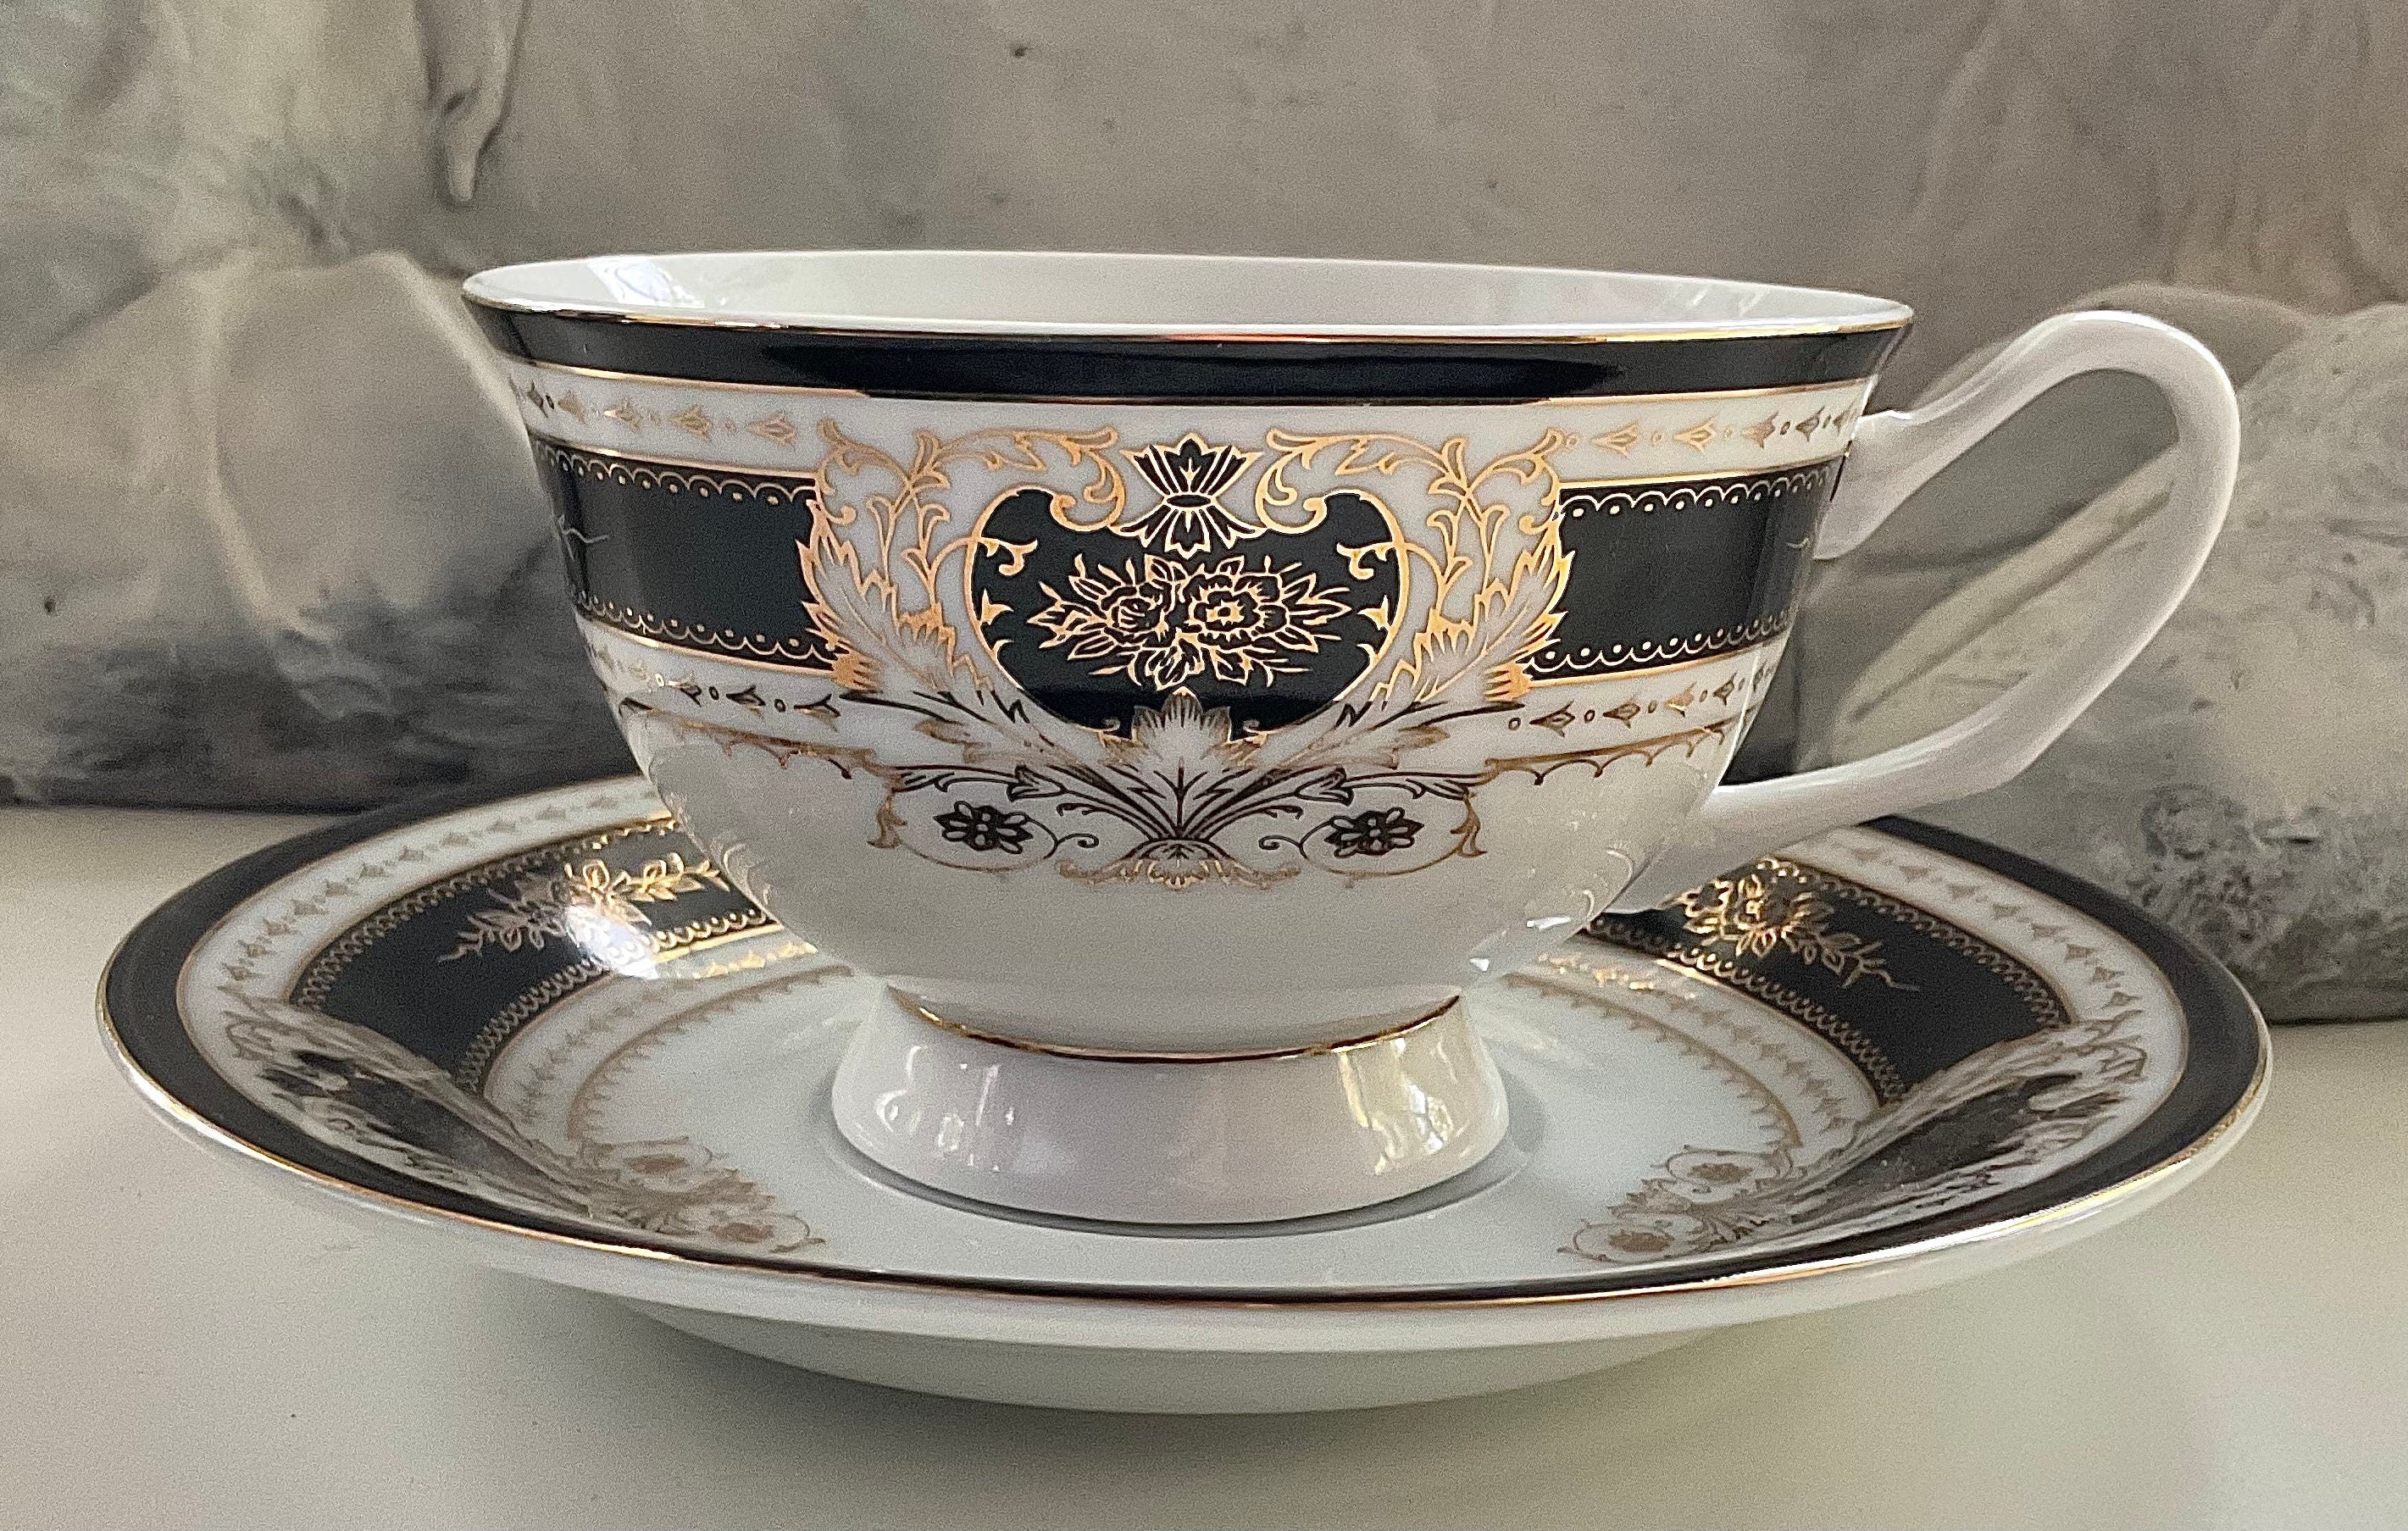 Spells under the Moon Teacup & Saucer, 8 oz, Porcelain – Angioletti Designs